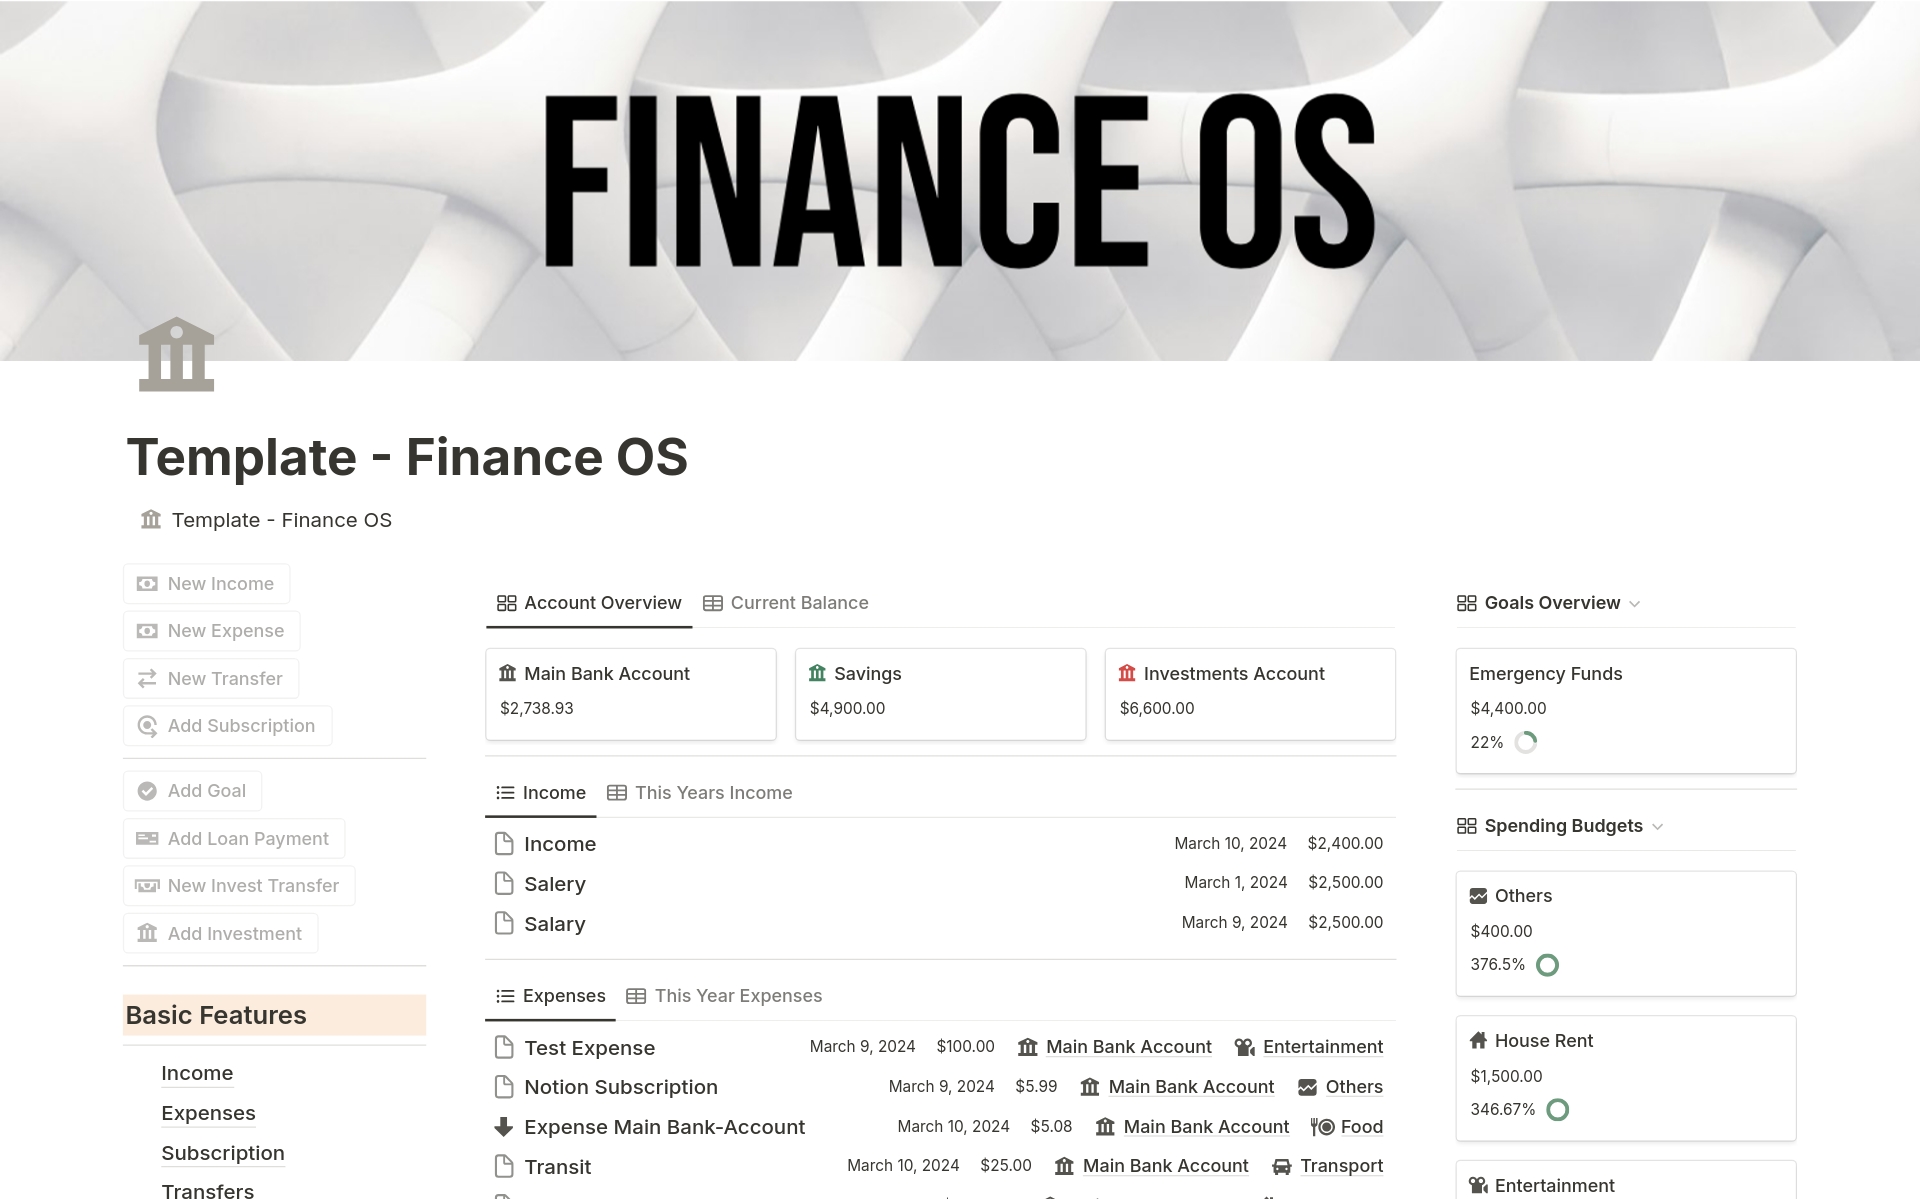 Aperçu du modèle de Finance OS